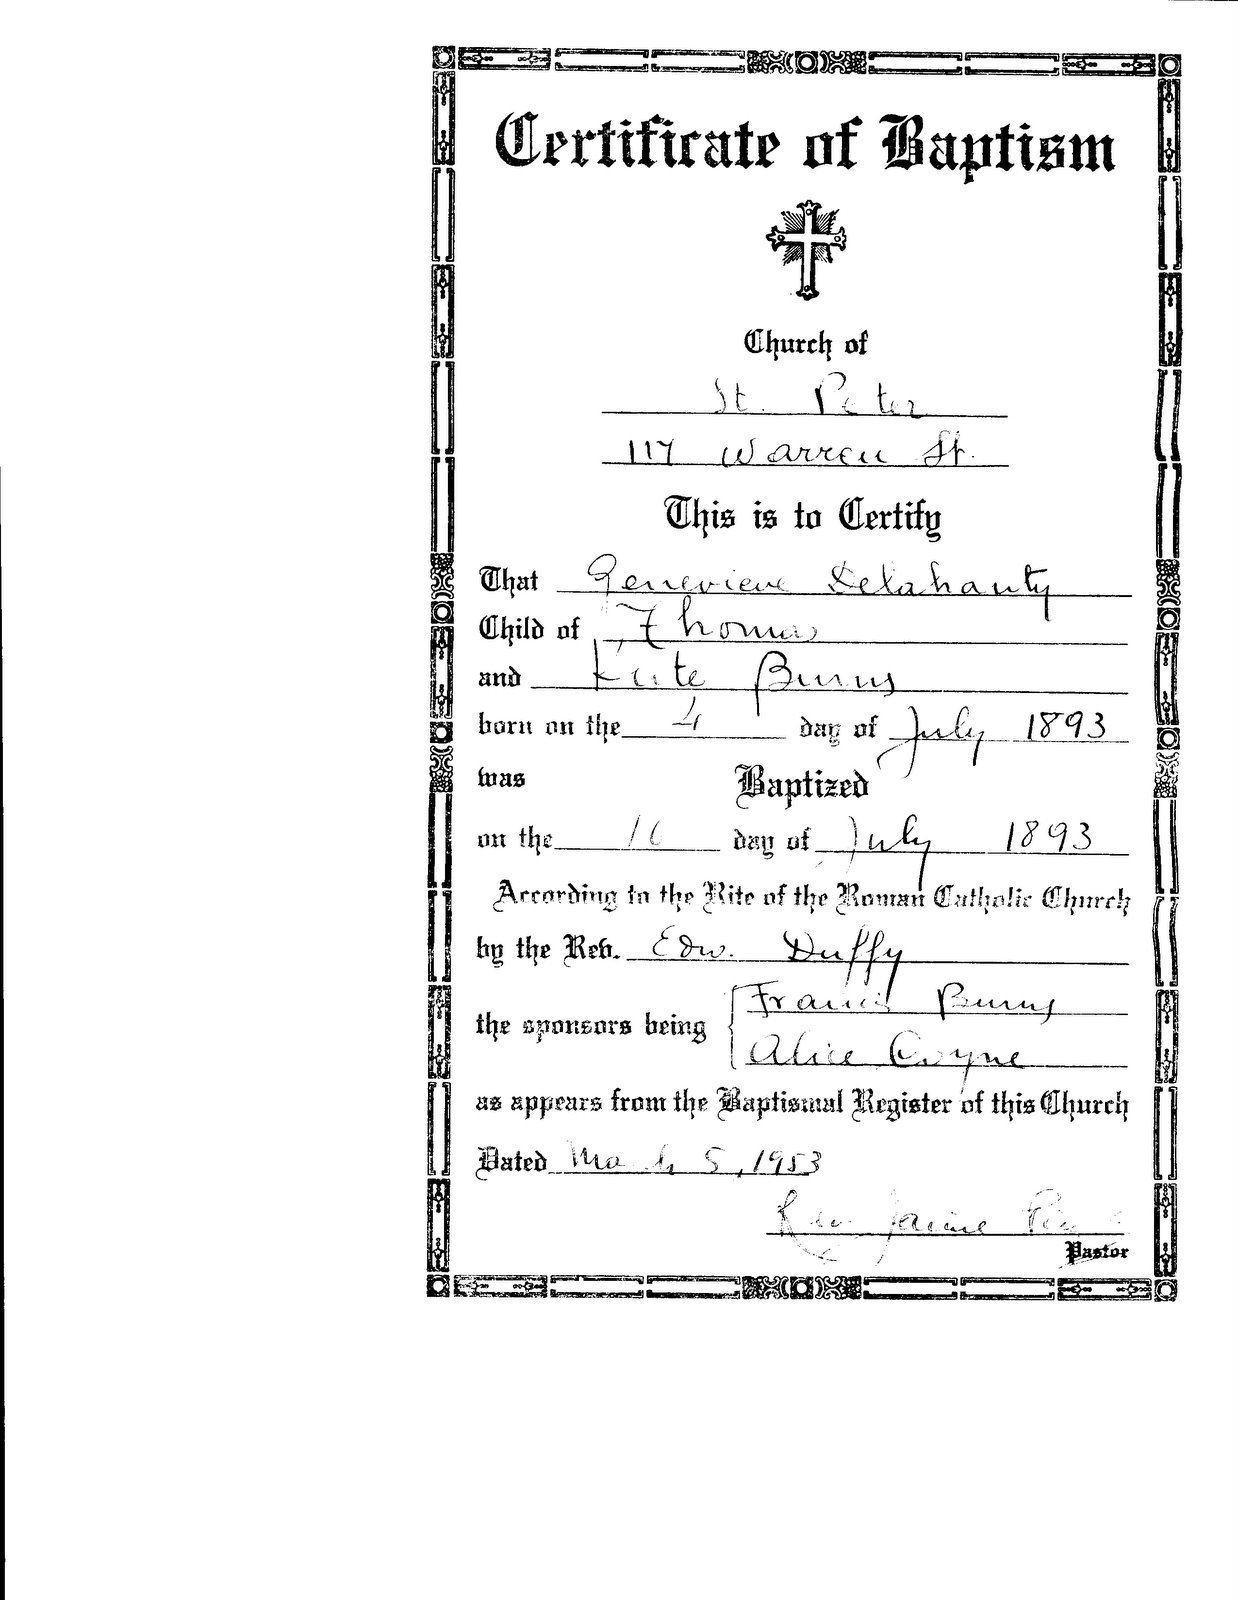 delahunty-family-genevieve-s-baptismal-certificate